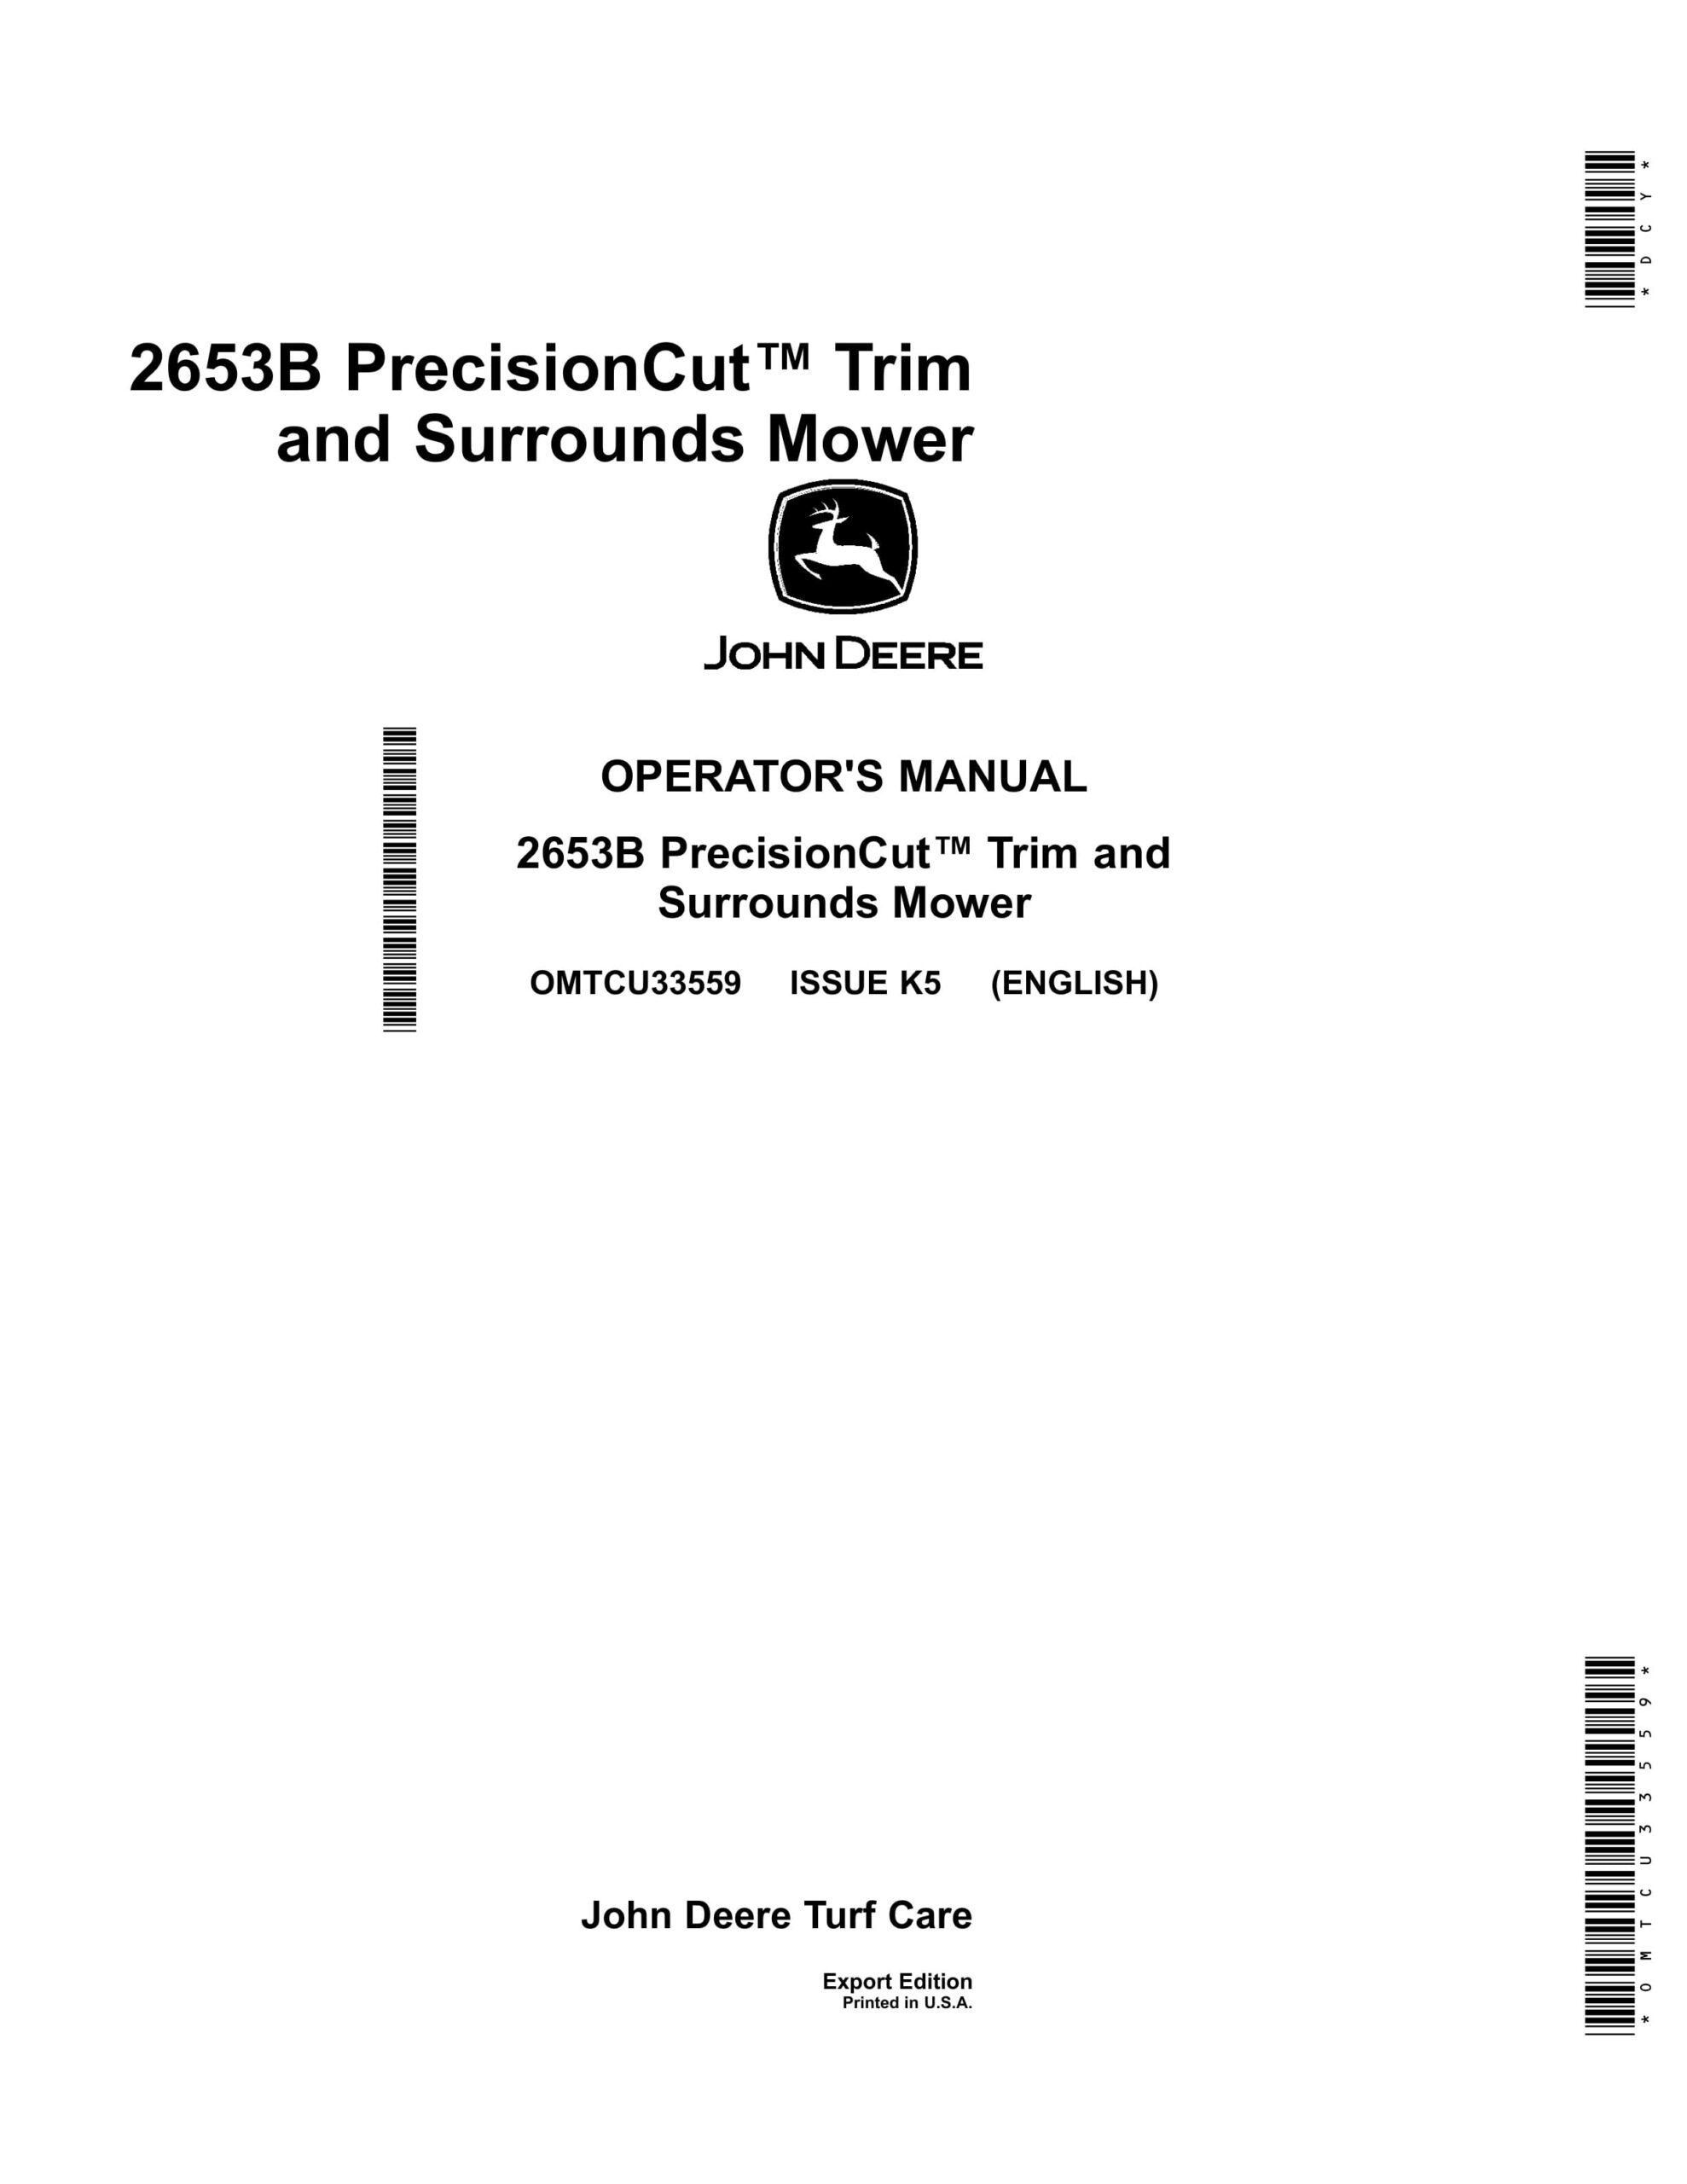 John Deere 2653B PrecisionCut Trim and Surrounds Mower Operator Manual OMTCU33559-1